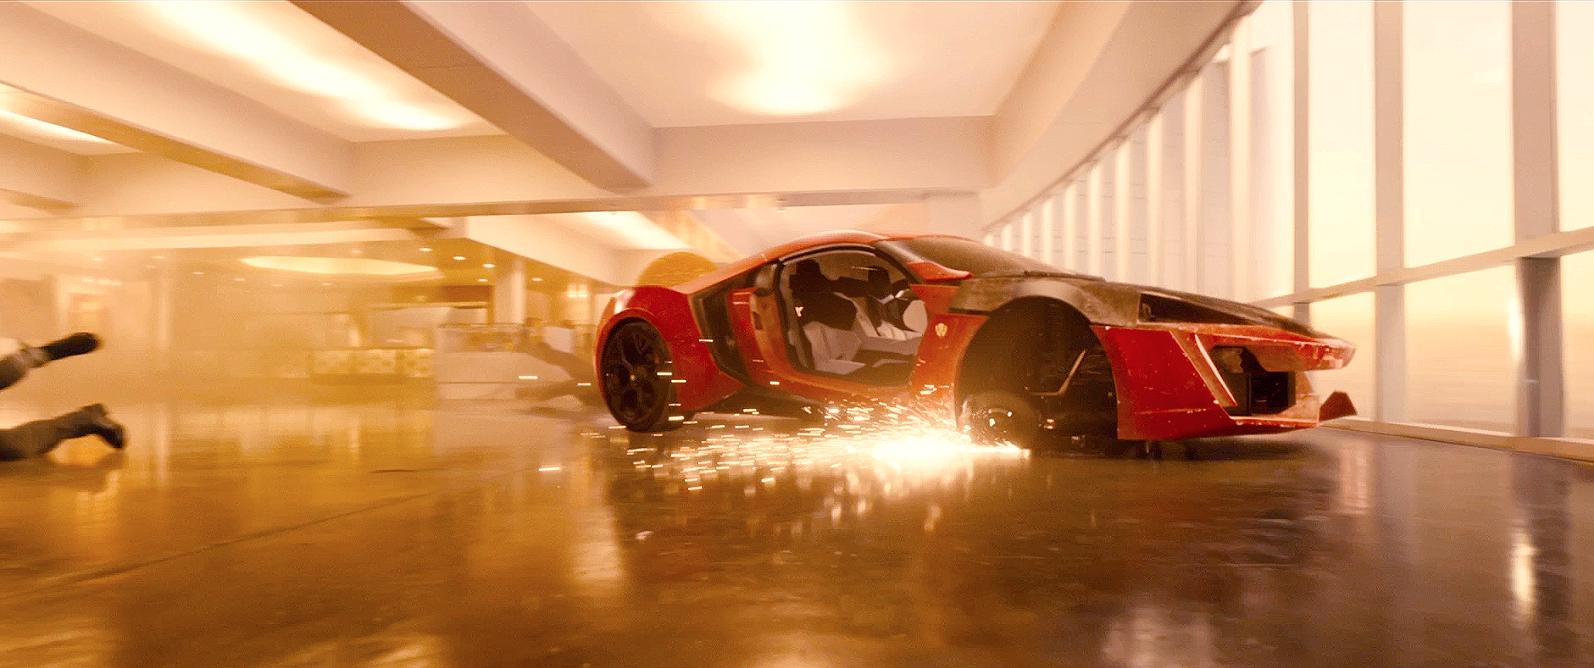 Dubai-made 'Fast & Furious' stunt car set for world's first automobile NFT  auction